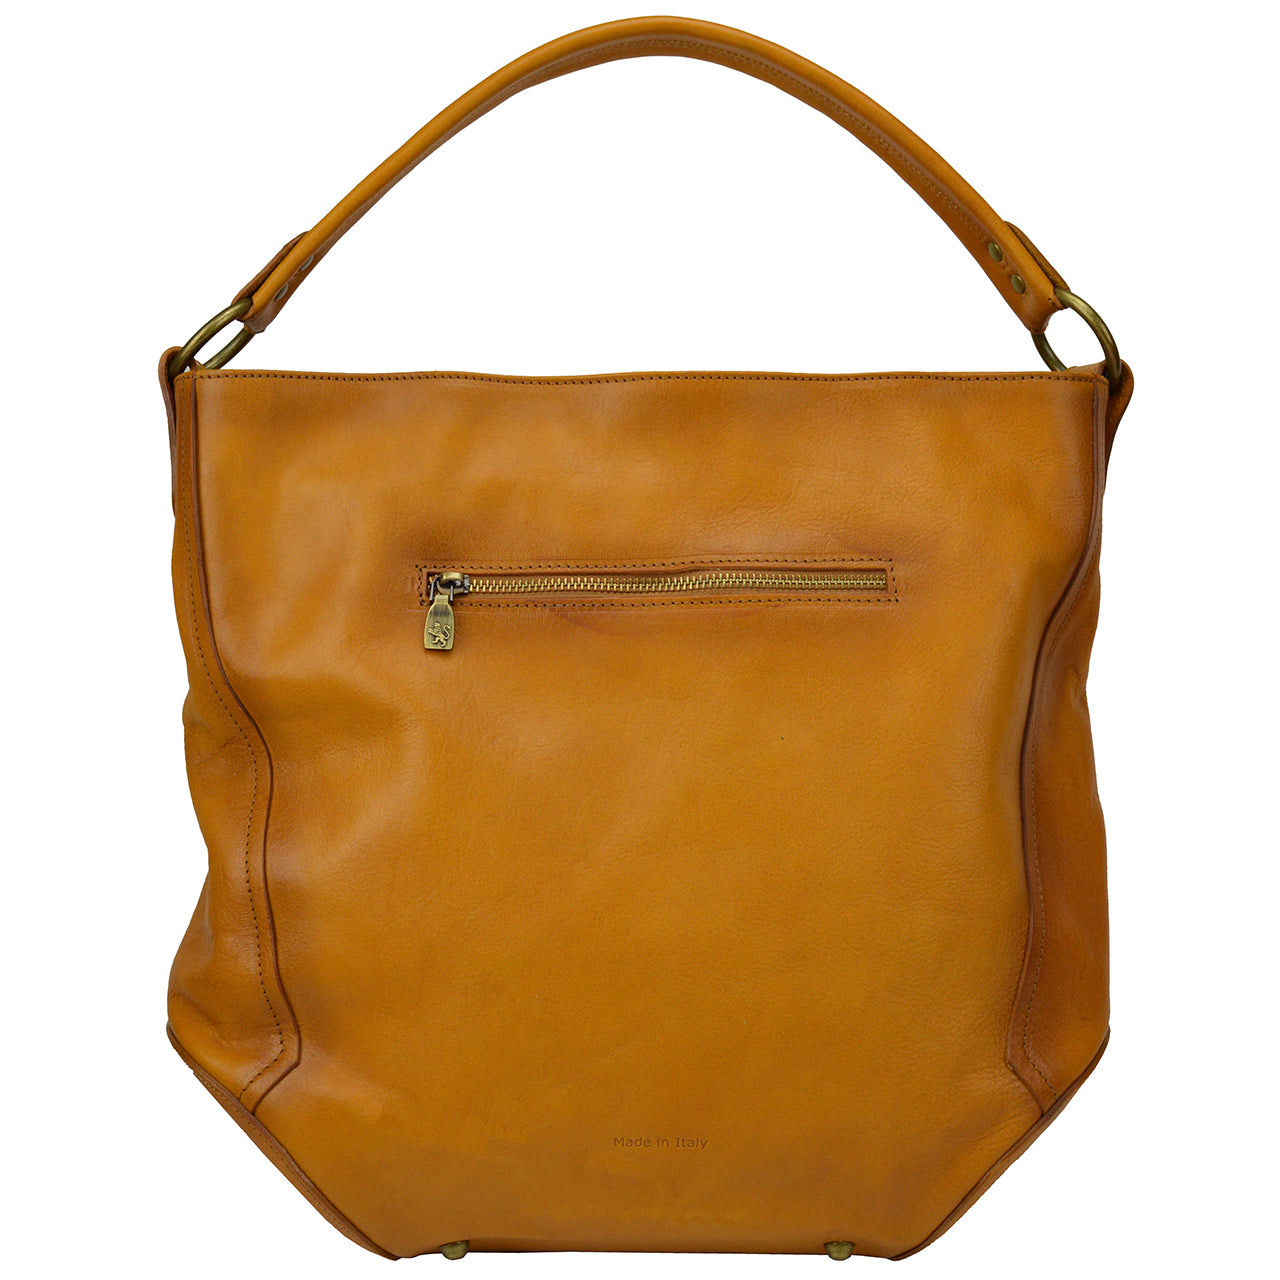 Pratesi Faella B477 Shoulder Bag in genuine Italian leather - Faella B477 Black